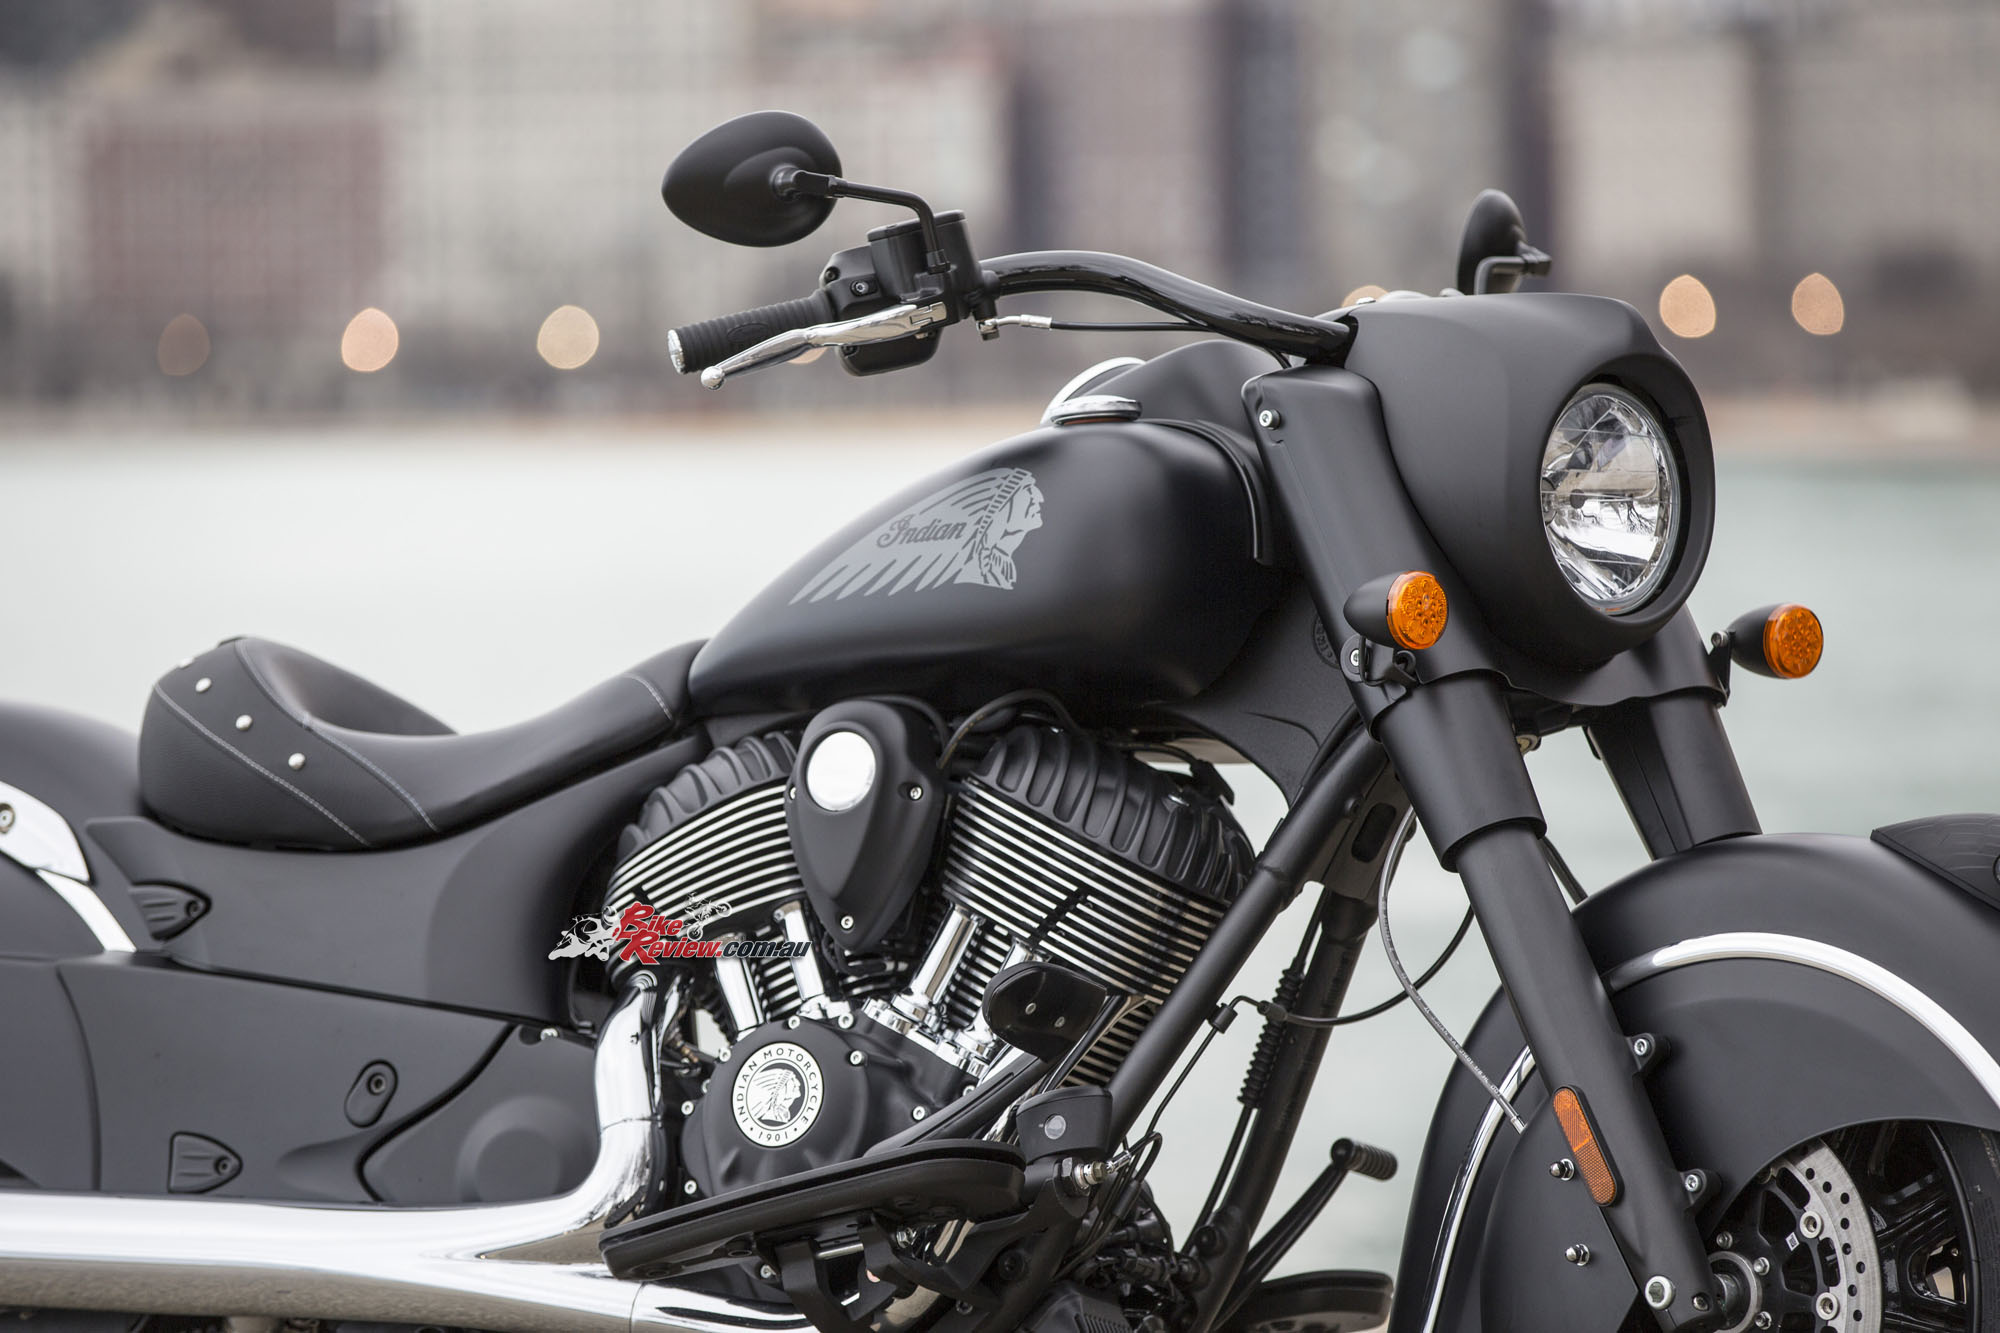 Honda CB1000R Naked Bike, Best Used Motorcycles | Cycle World